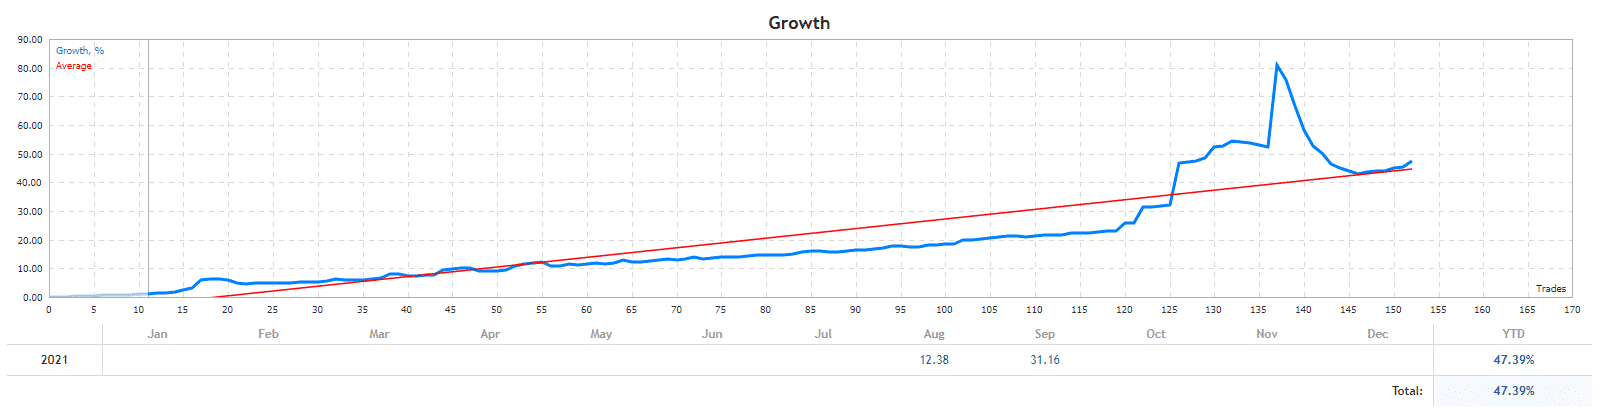 Advanced Hedge growth chart.